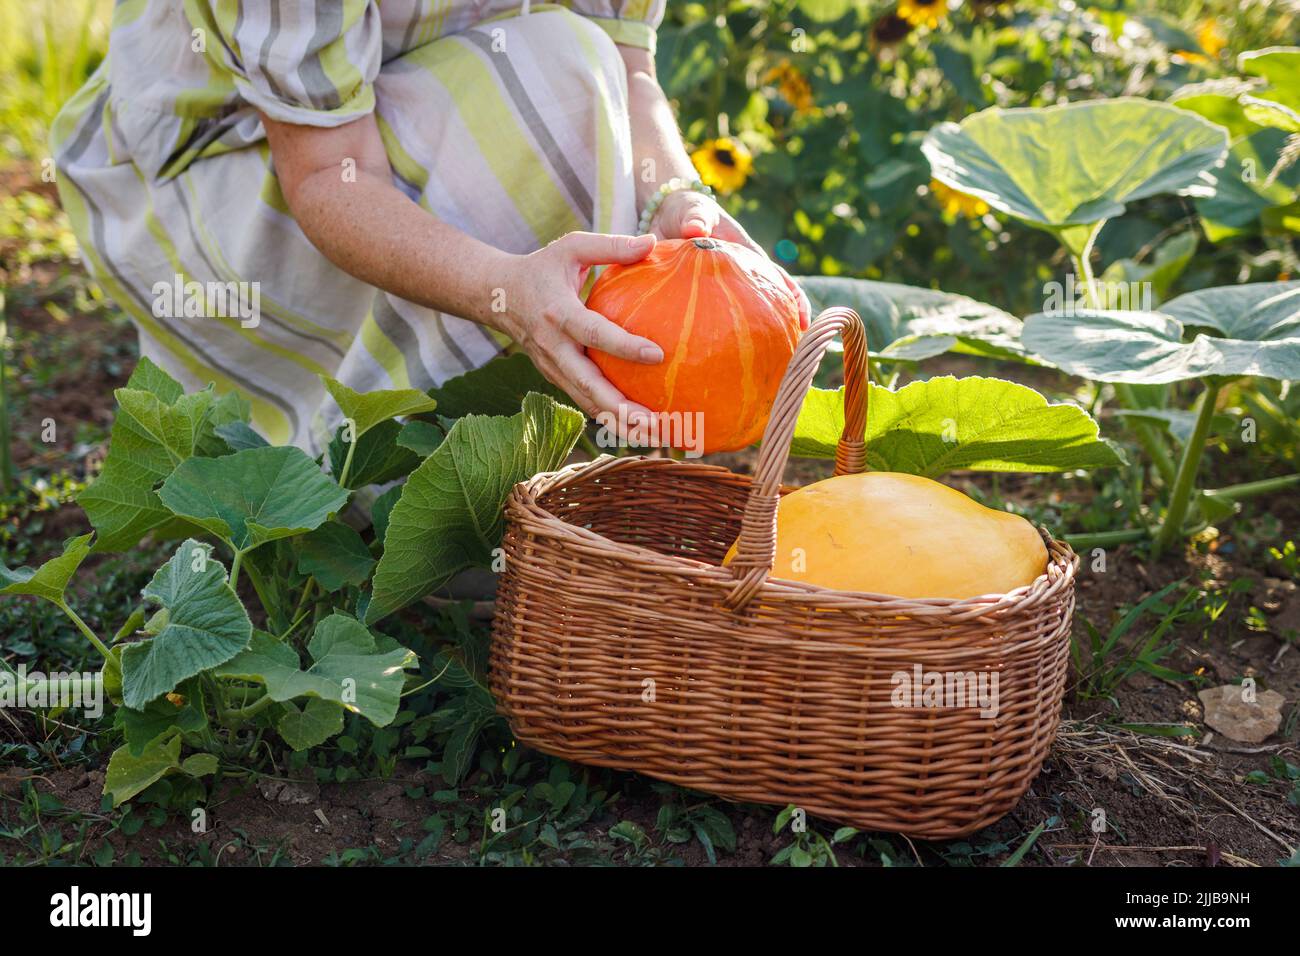 Woman farmer harvesting pumpkins from organic vegetable garden. Summer gardening Stock Photo